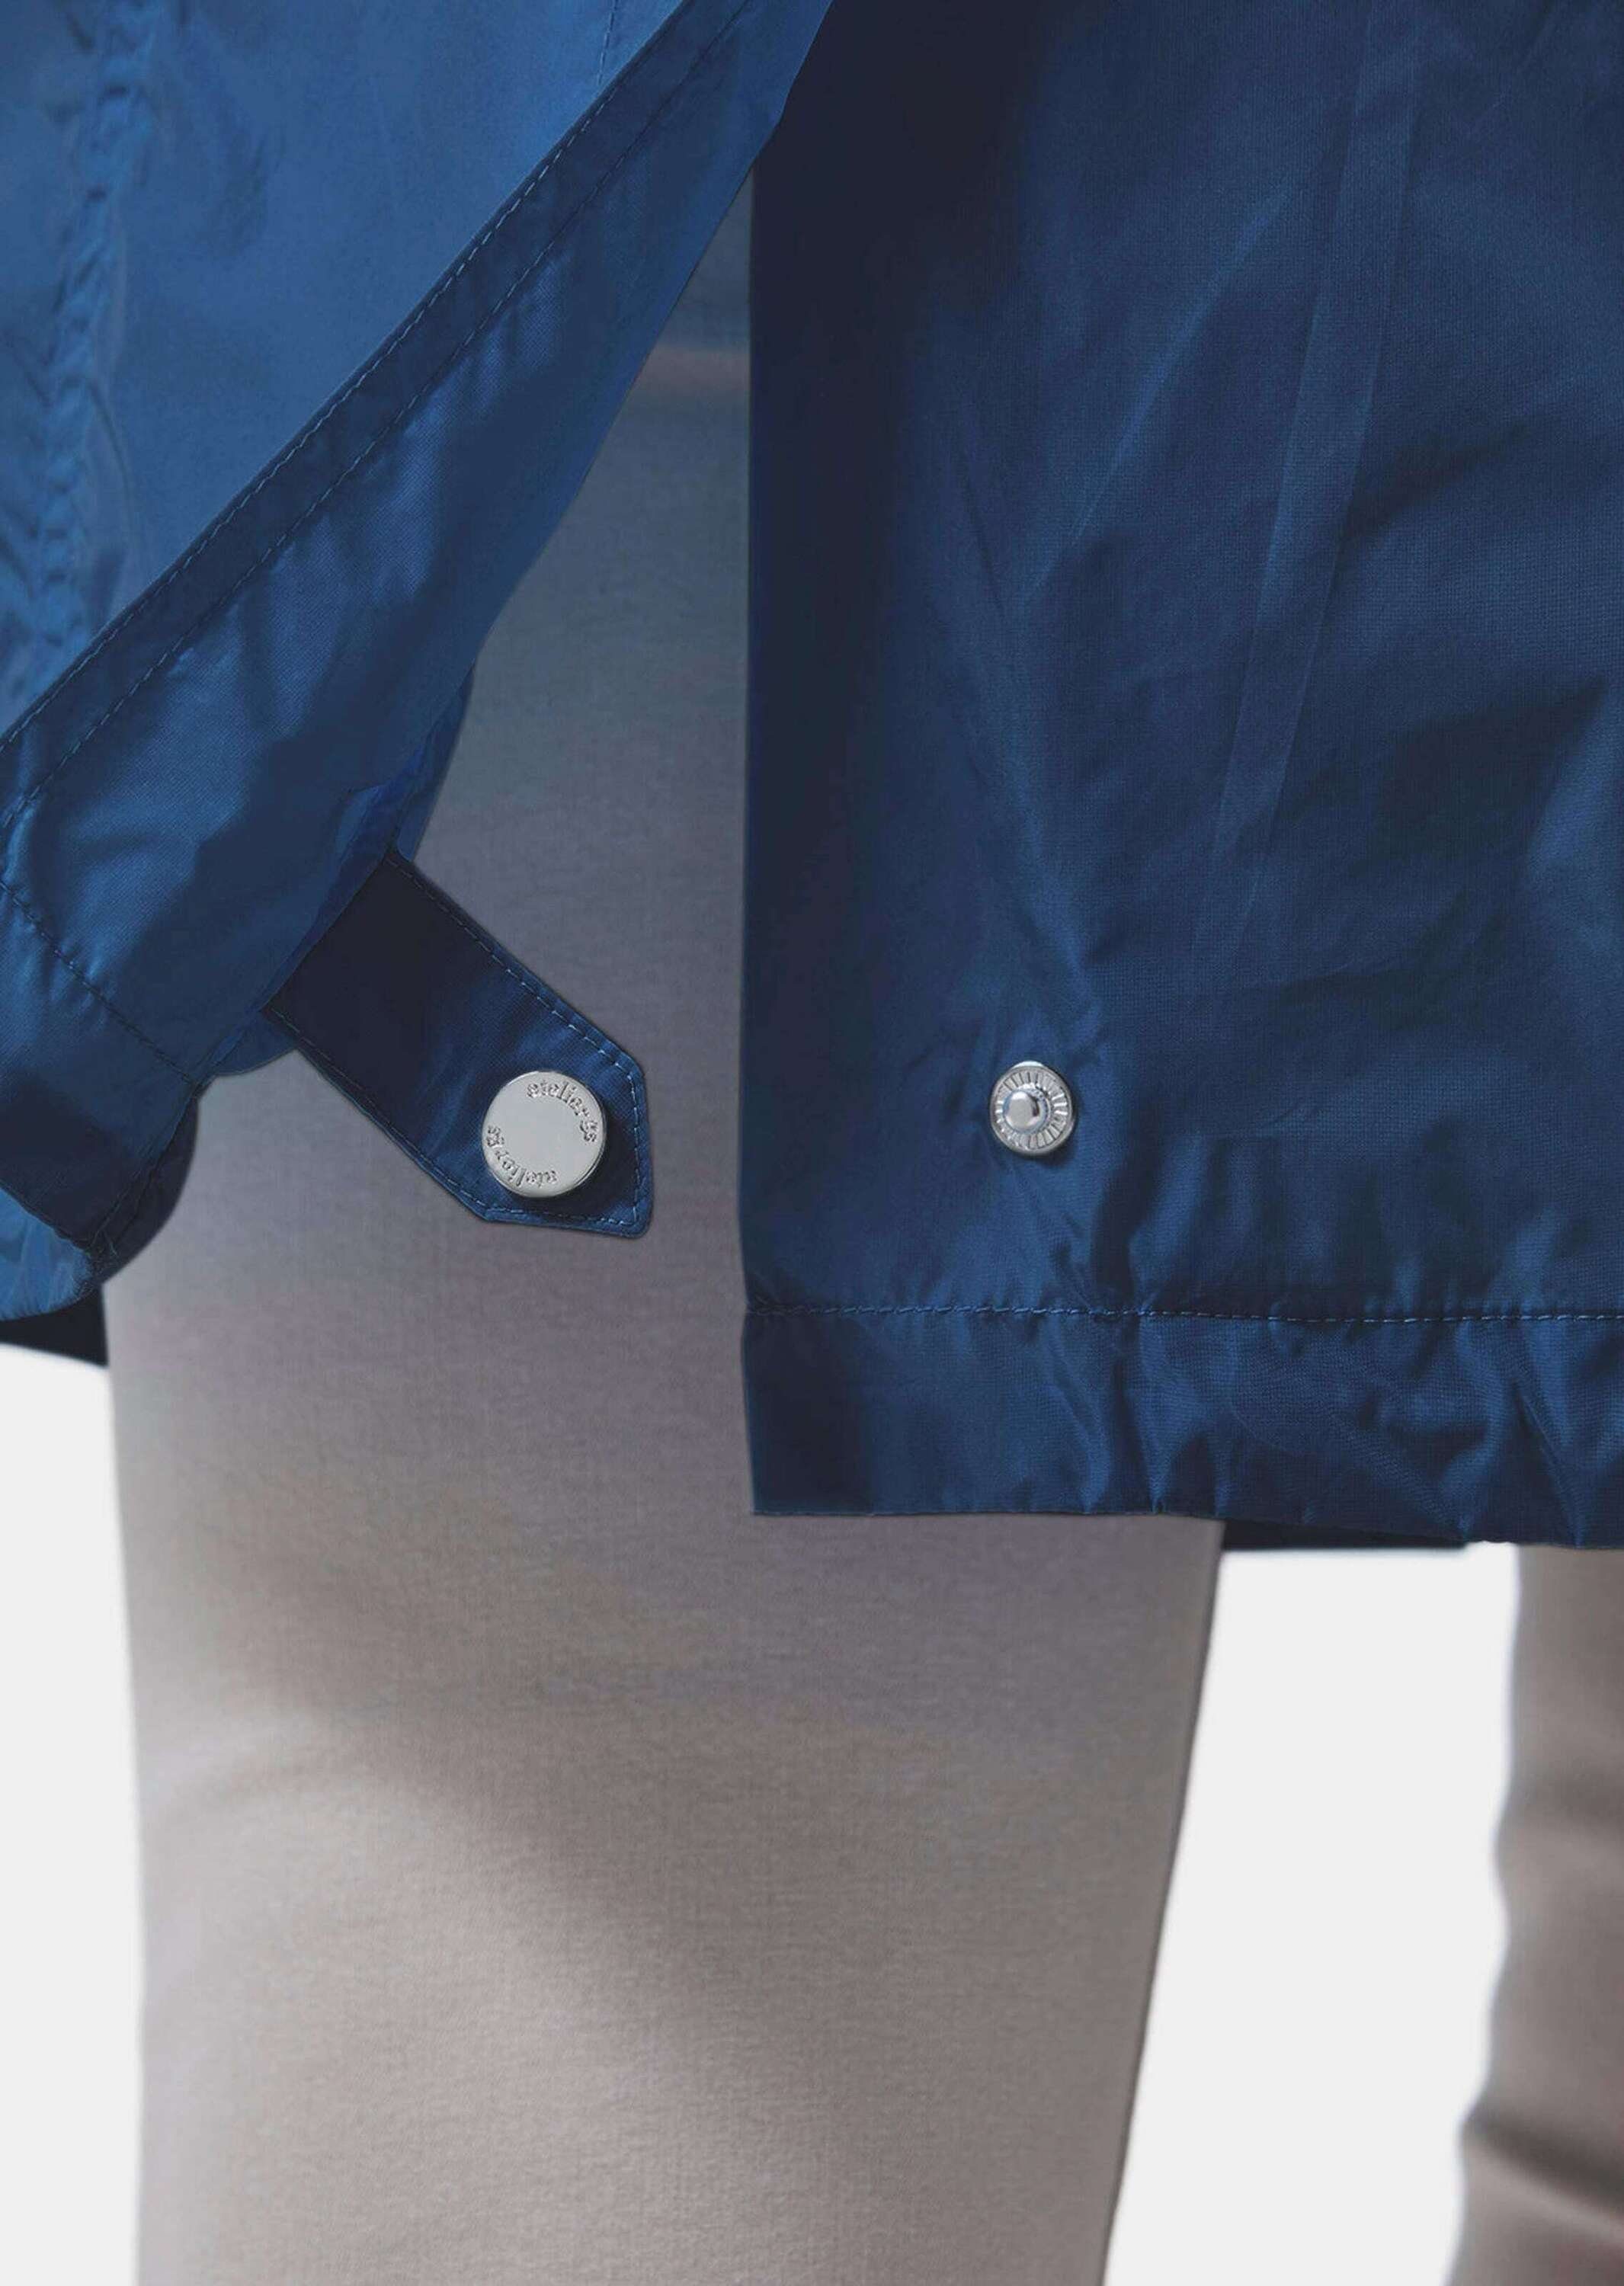 GOLDNER Outdoorjacke aus royalblau funktionalem Material leichter Regen Parka Trendiger